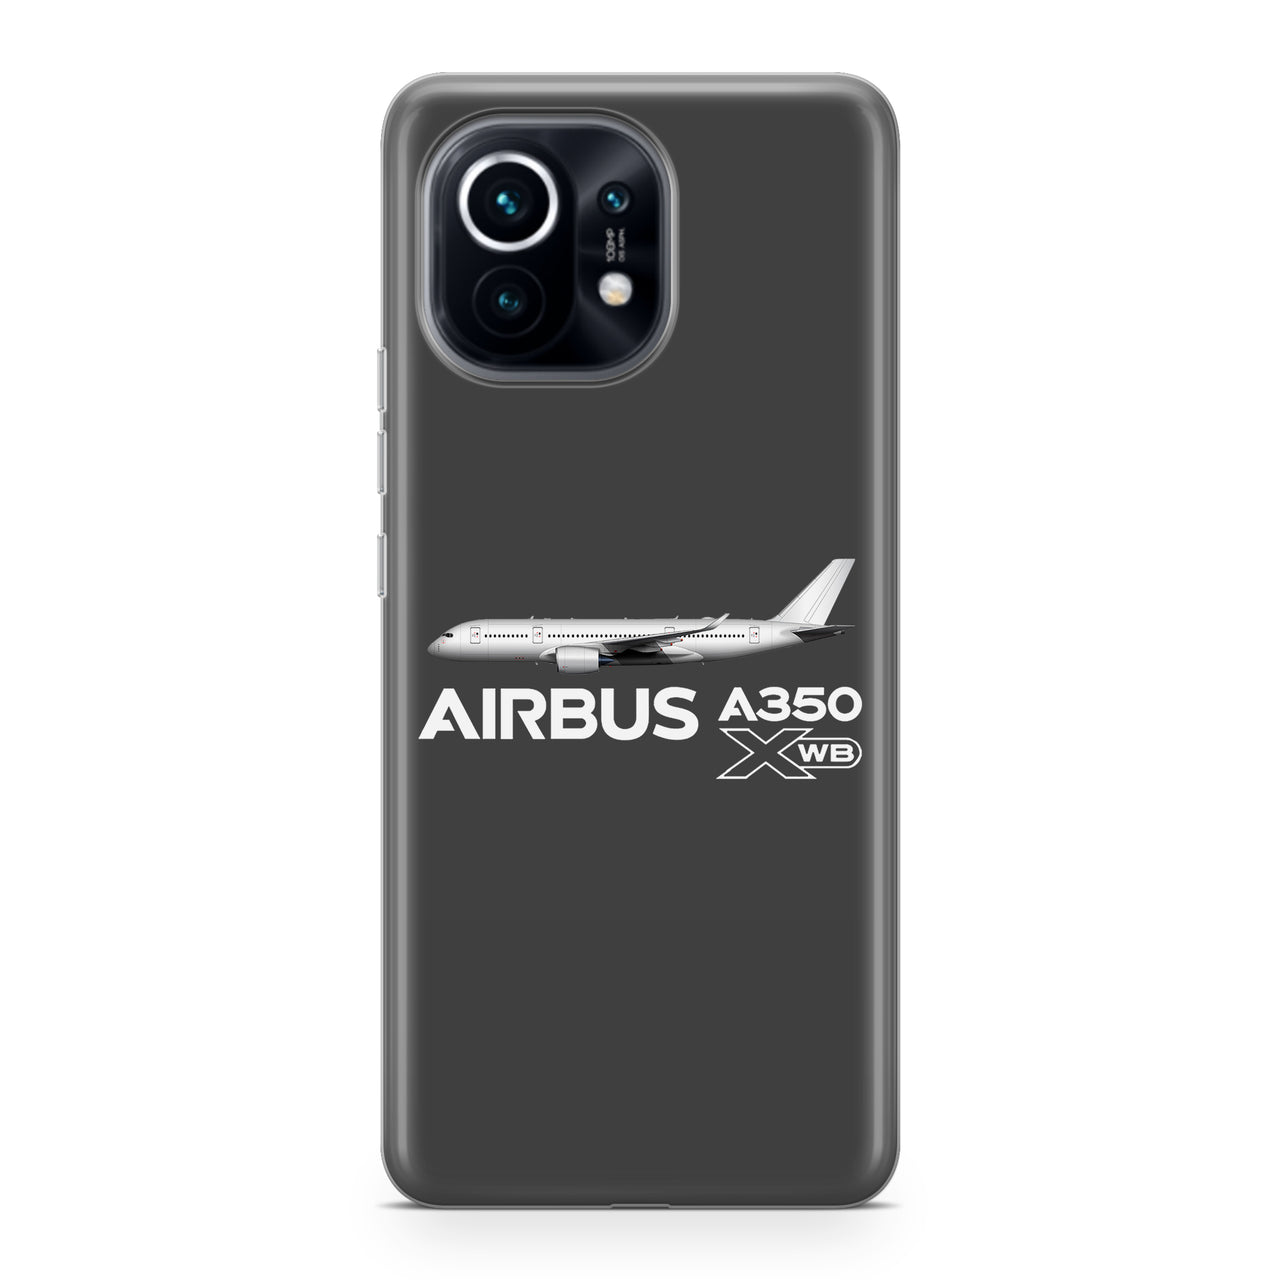 The Airbus A350 WXB Designed Xiaomi Cases